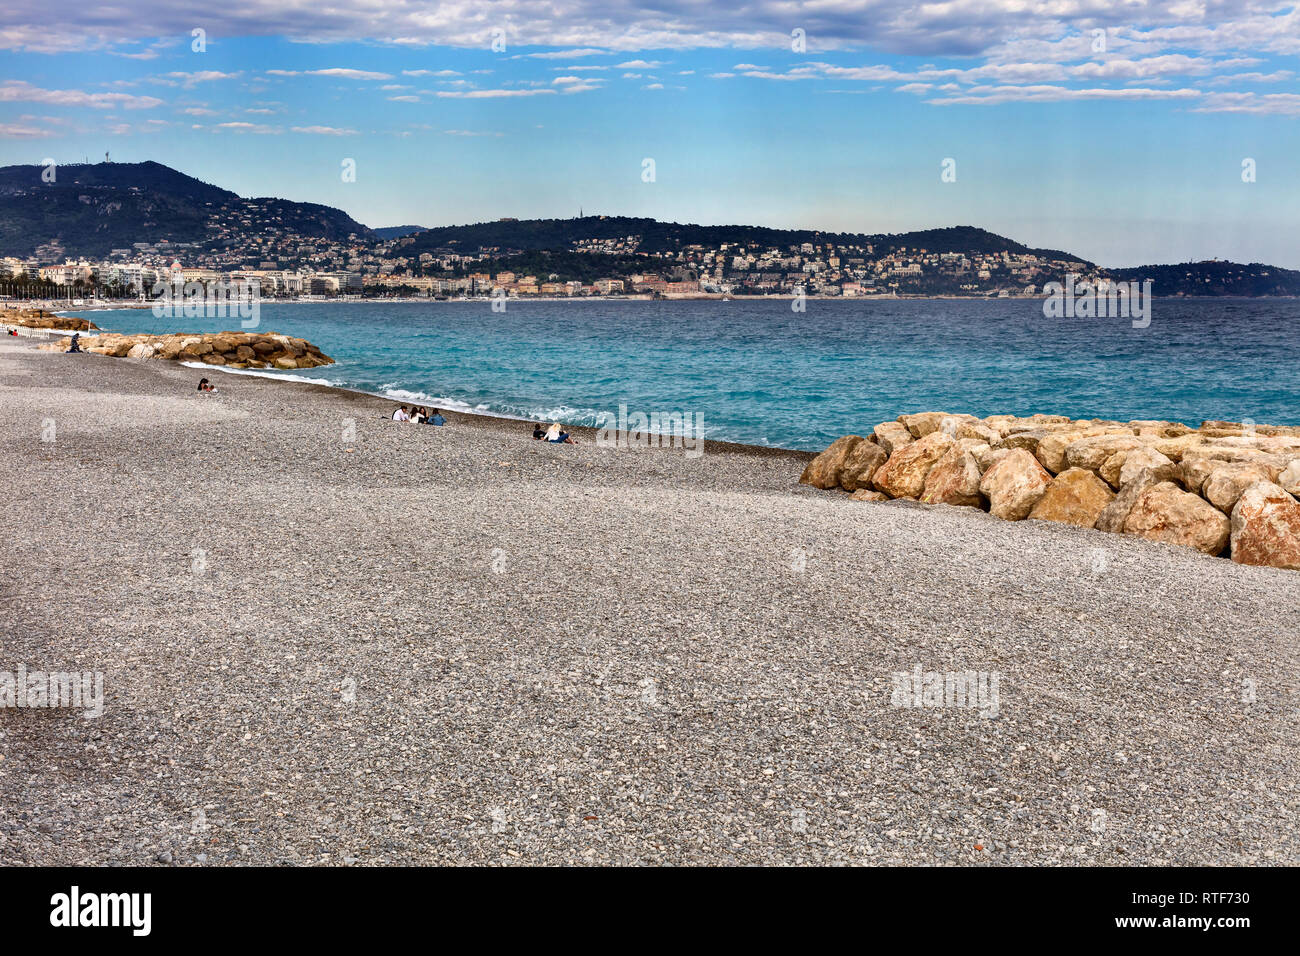 Promenade des Anglais, Nice, Alpes Maritimes departement, France Stock Photo